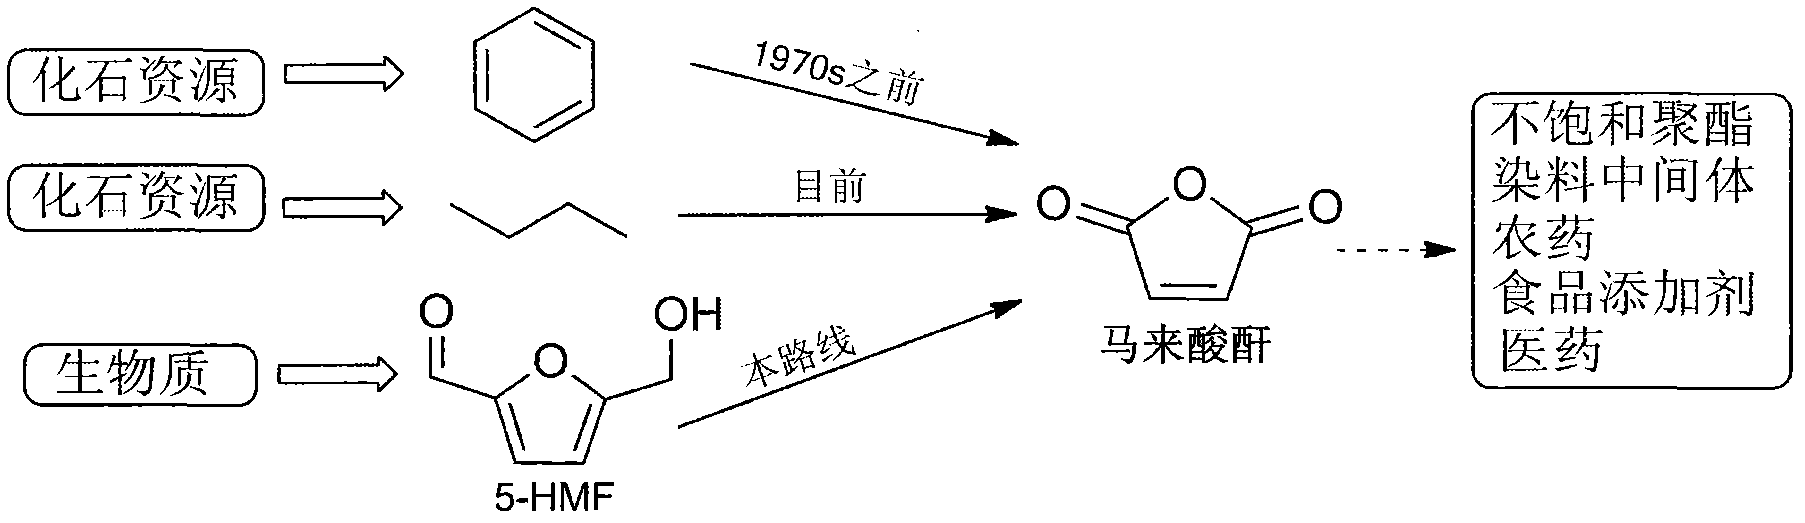 Method for preparing maleic anhydride by catalytic oxidation of 5-hydroxymethylfurfural